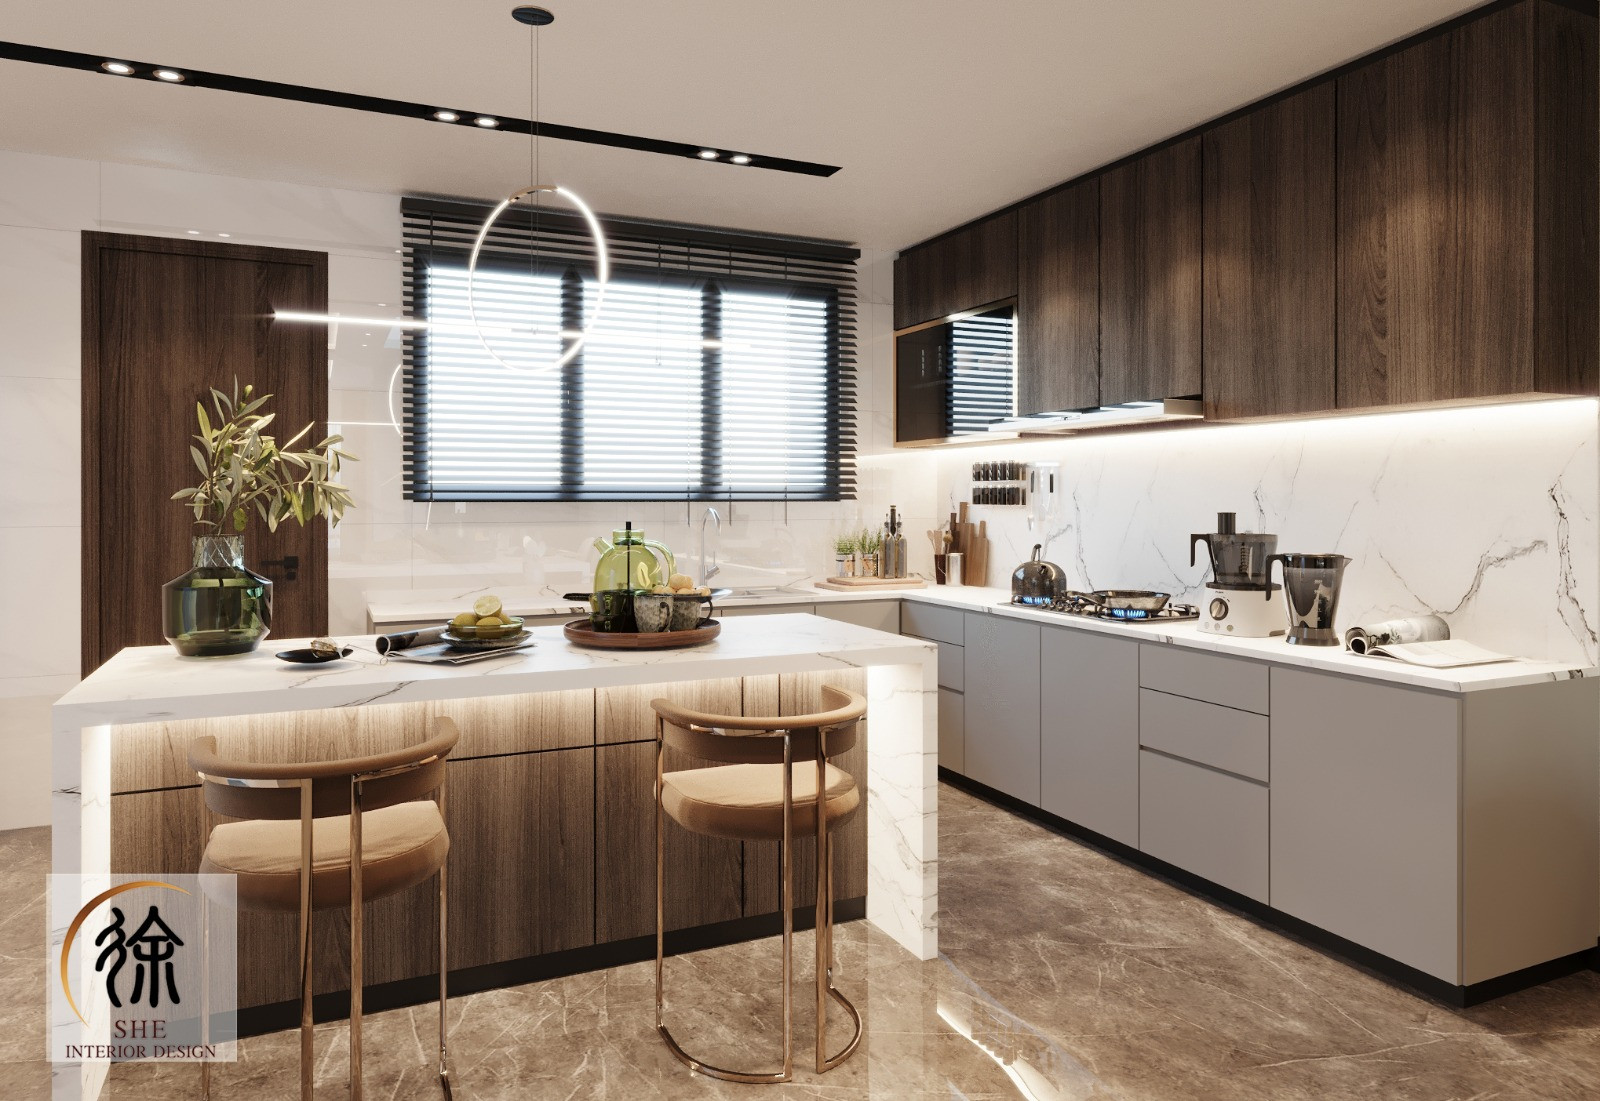 Modern Kitchen Design Inspiration in Singapore - SHE interior